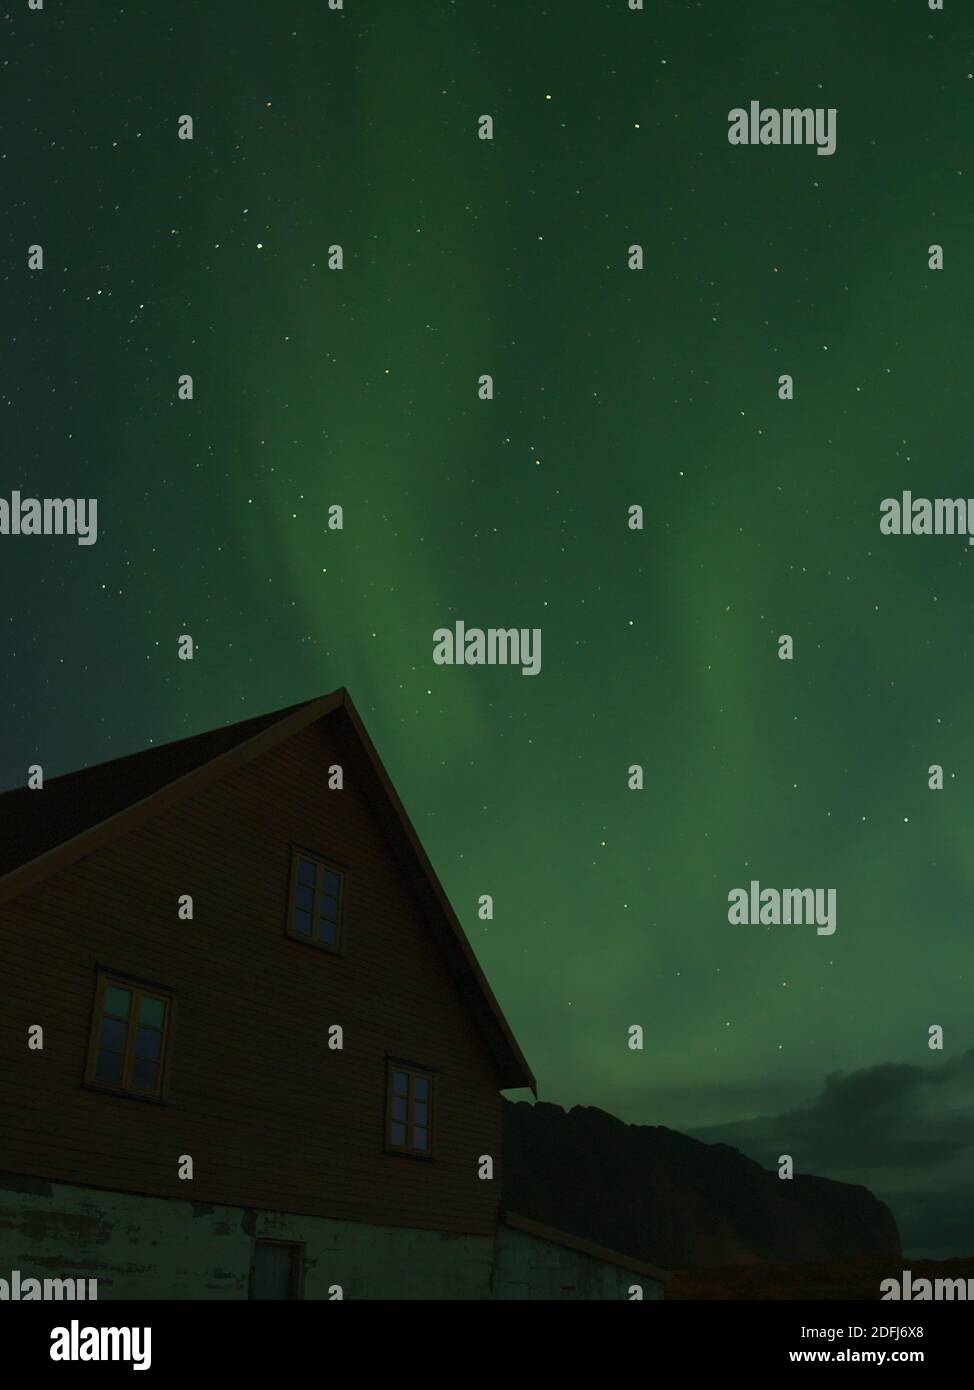 Stunning upright view of night sky with bright green shimmering polar lights (aurora borealis) above old house on Vestvågøy island, Lofoten, Norway. Stock Photo